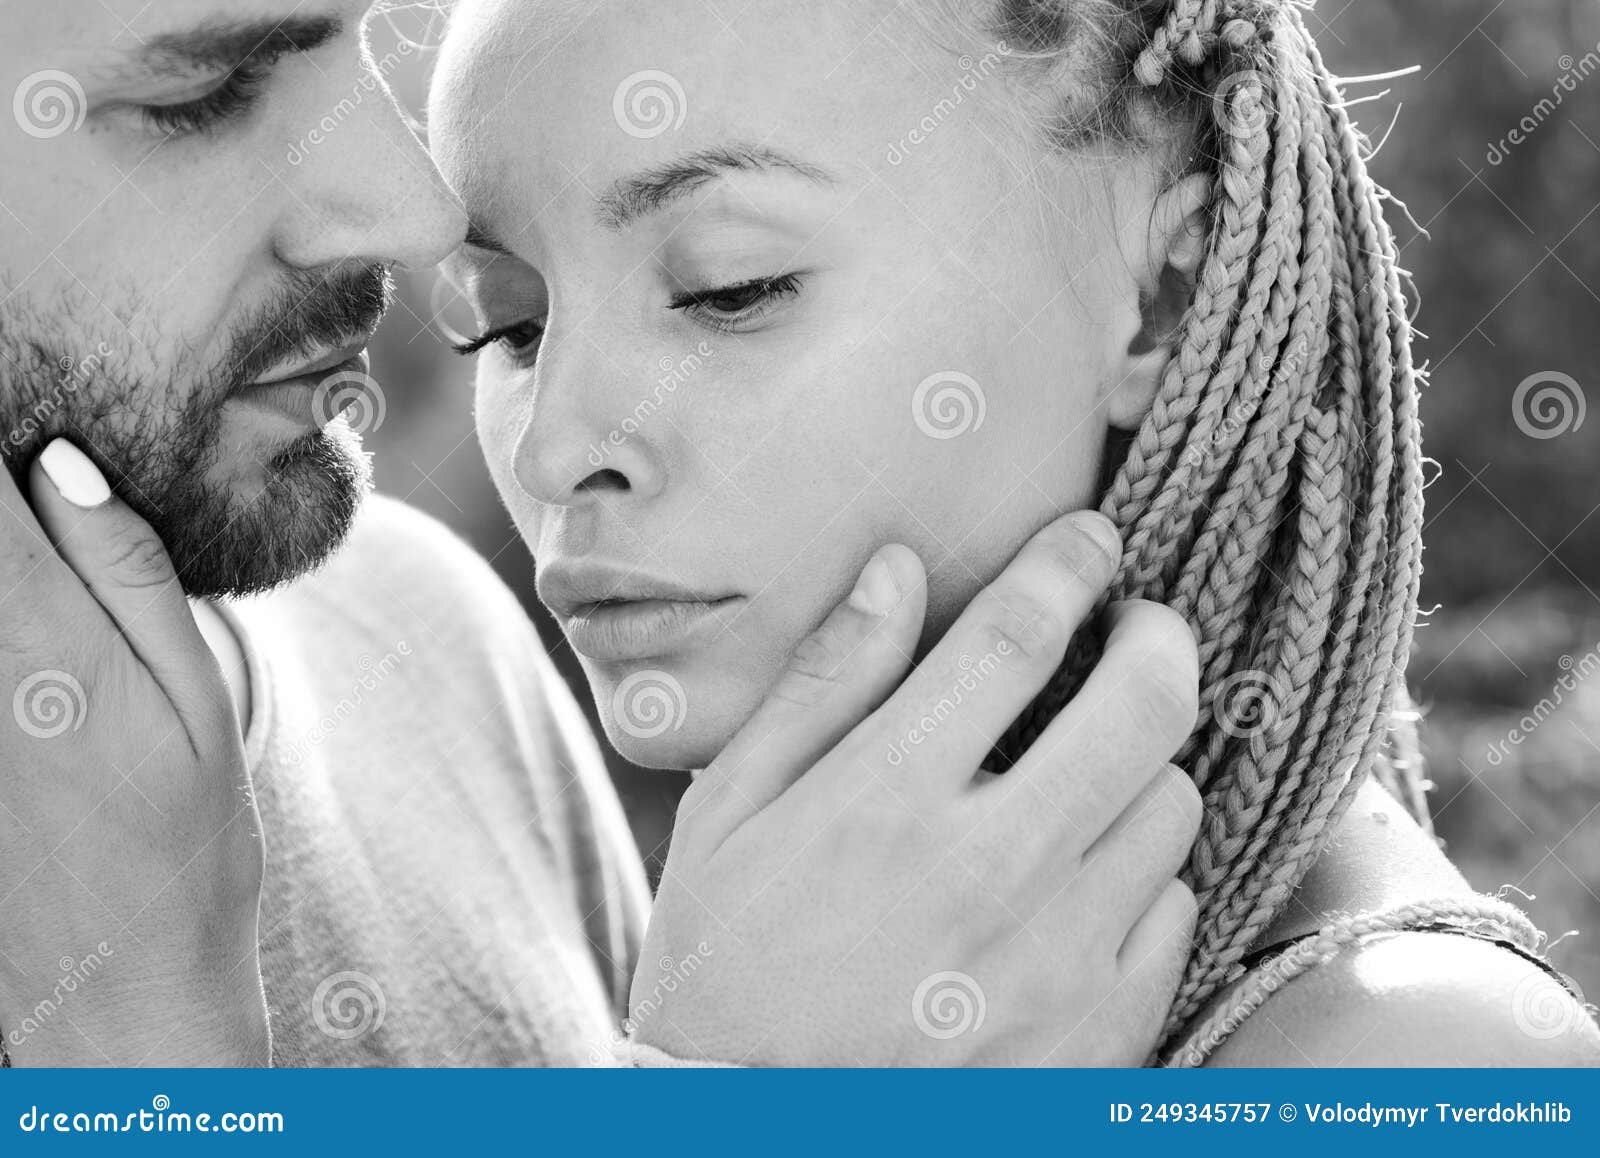 Man with Woman Kisses. Sensual Kiss. Hot Foreplay pic